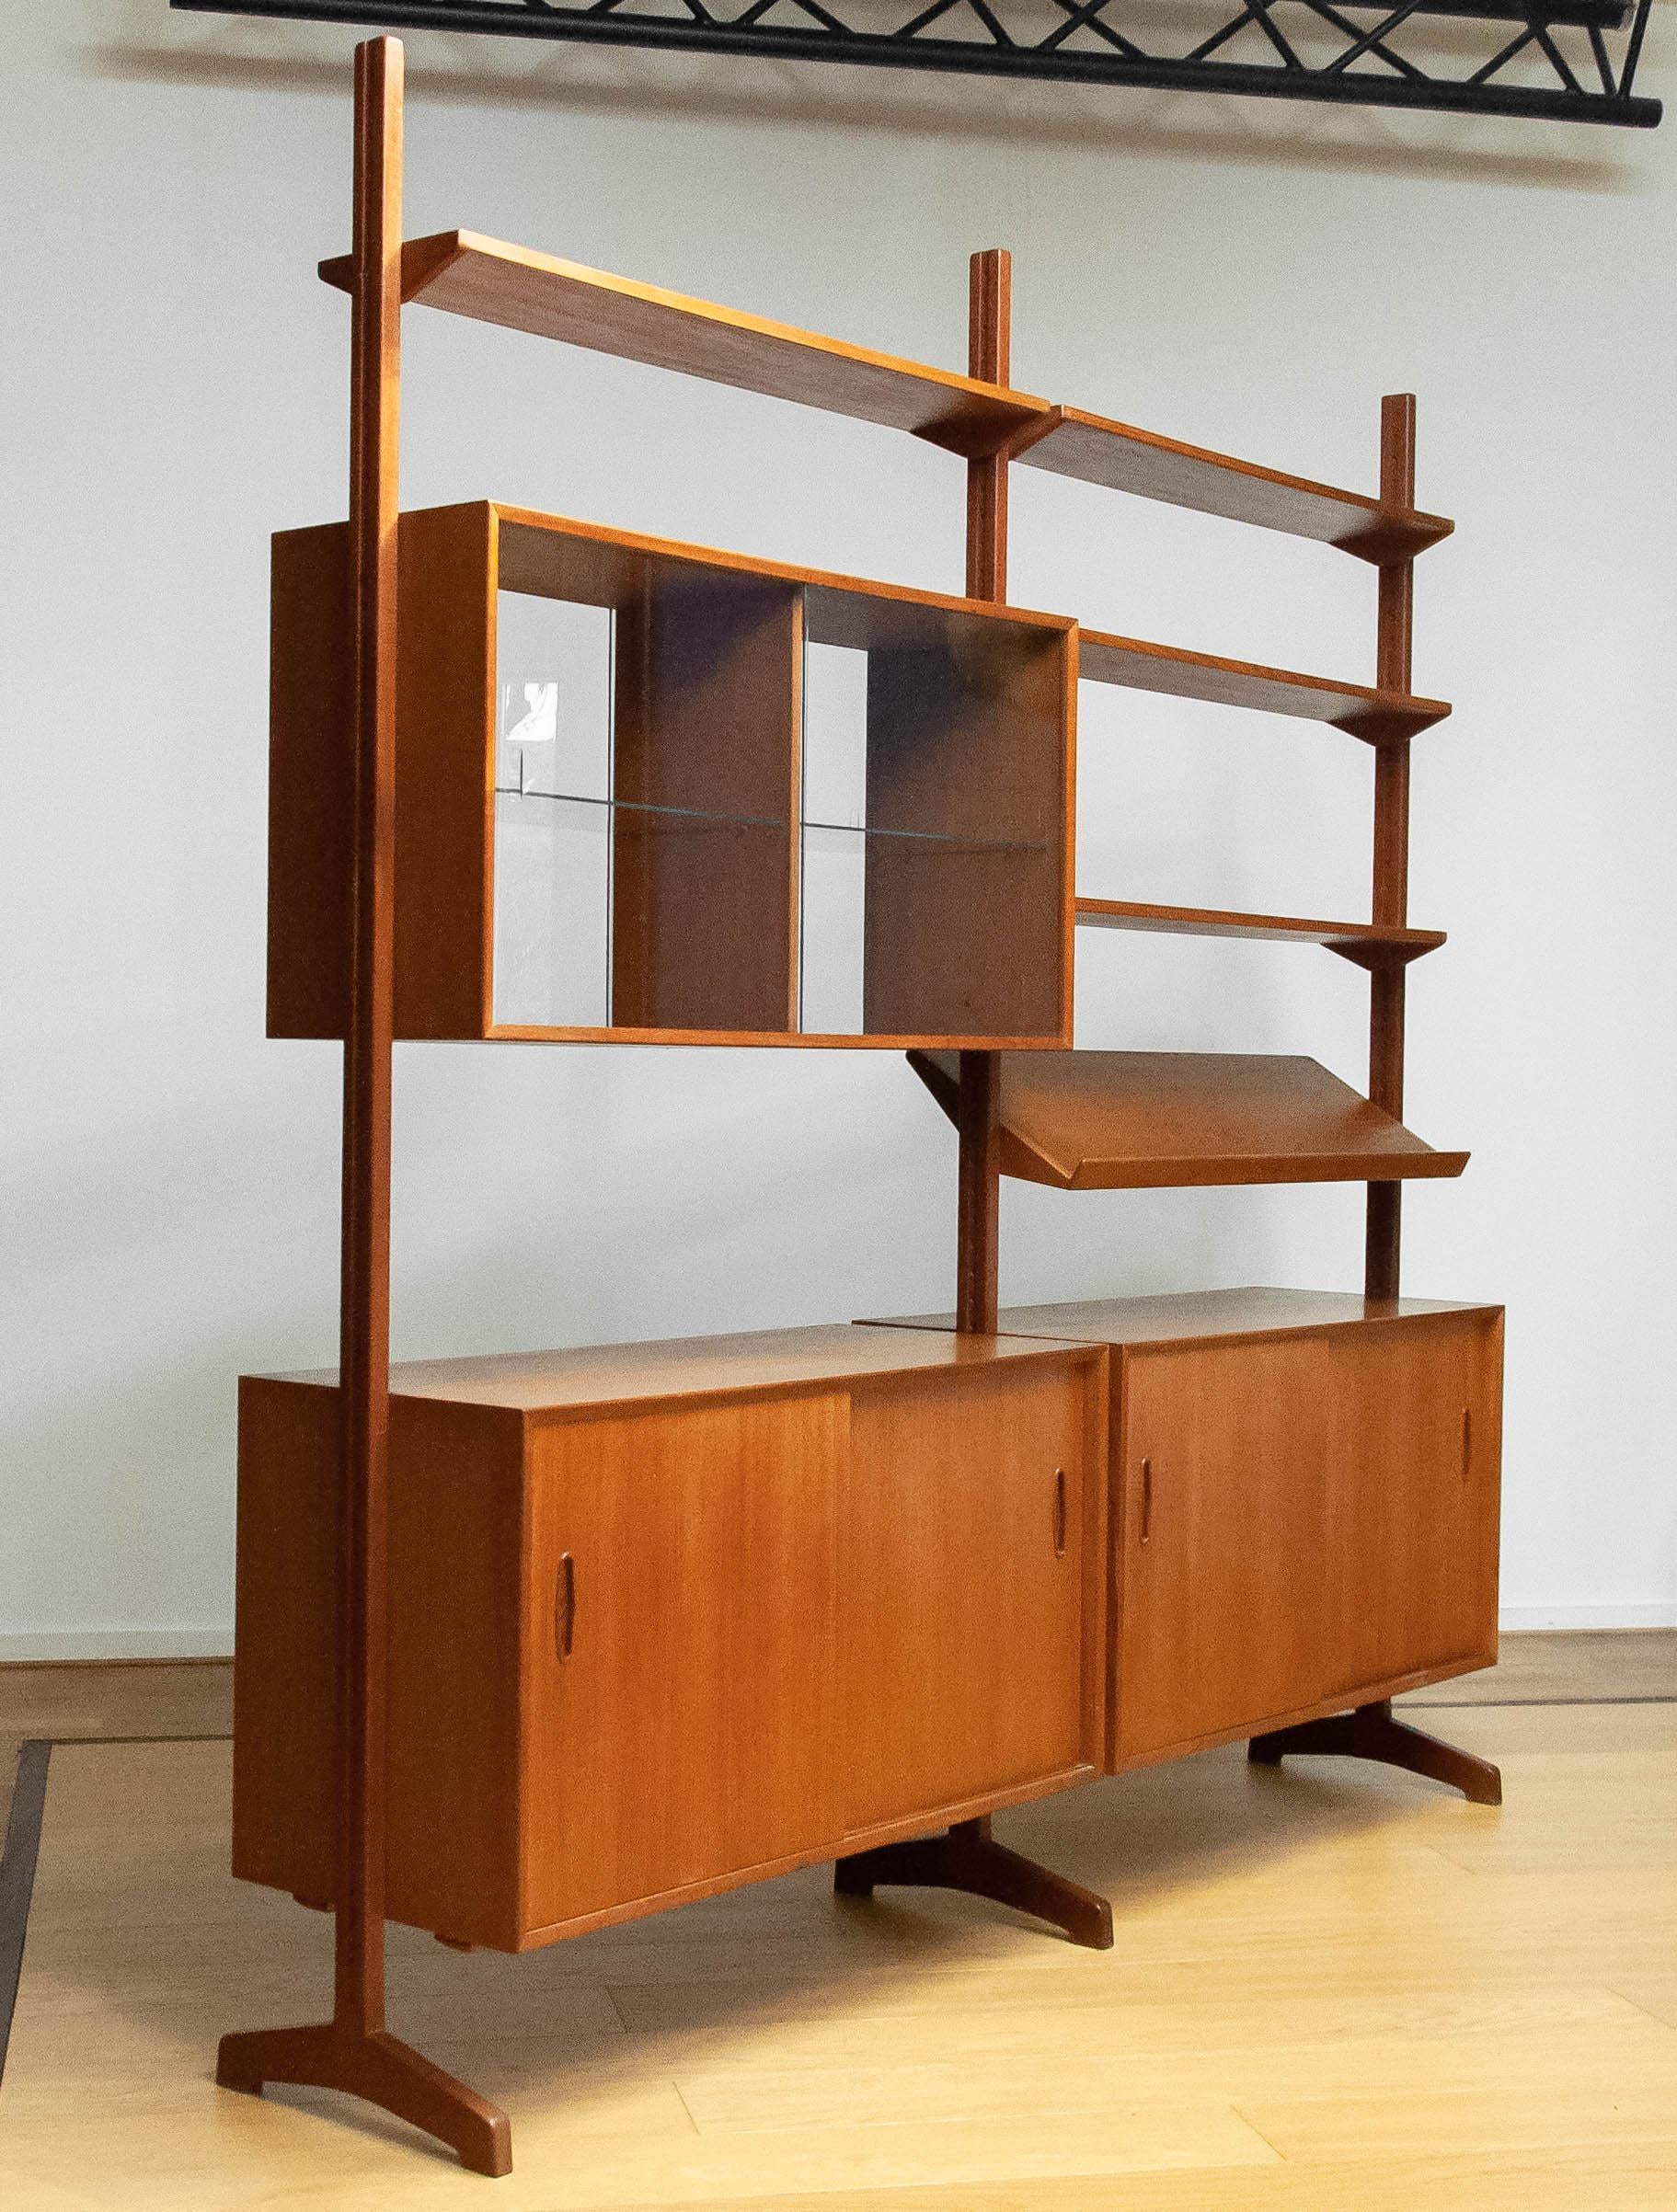 Scandinavian Modern 1950s Teak Bookcase Shelf Cabinet / Room divider By Nils Jonsson For Troeds. For Sale